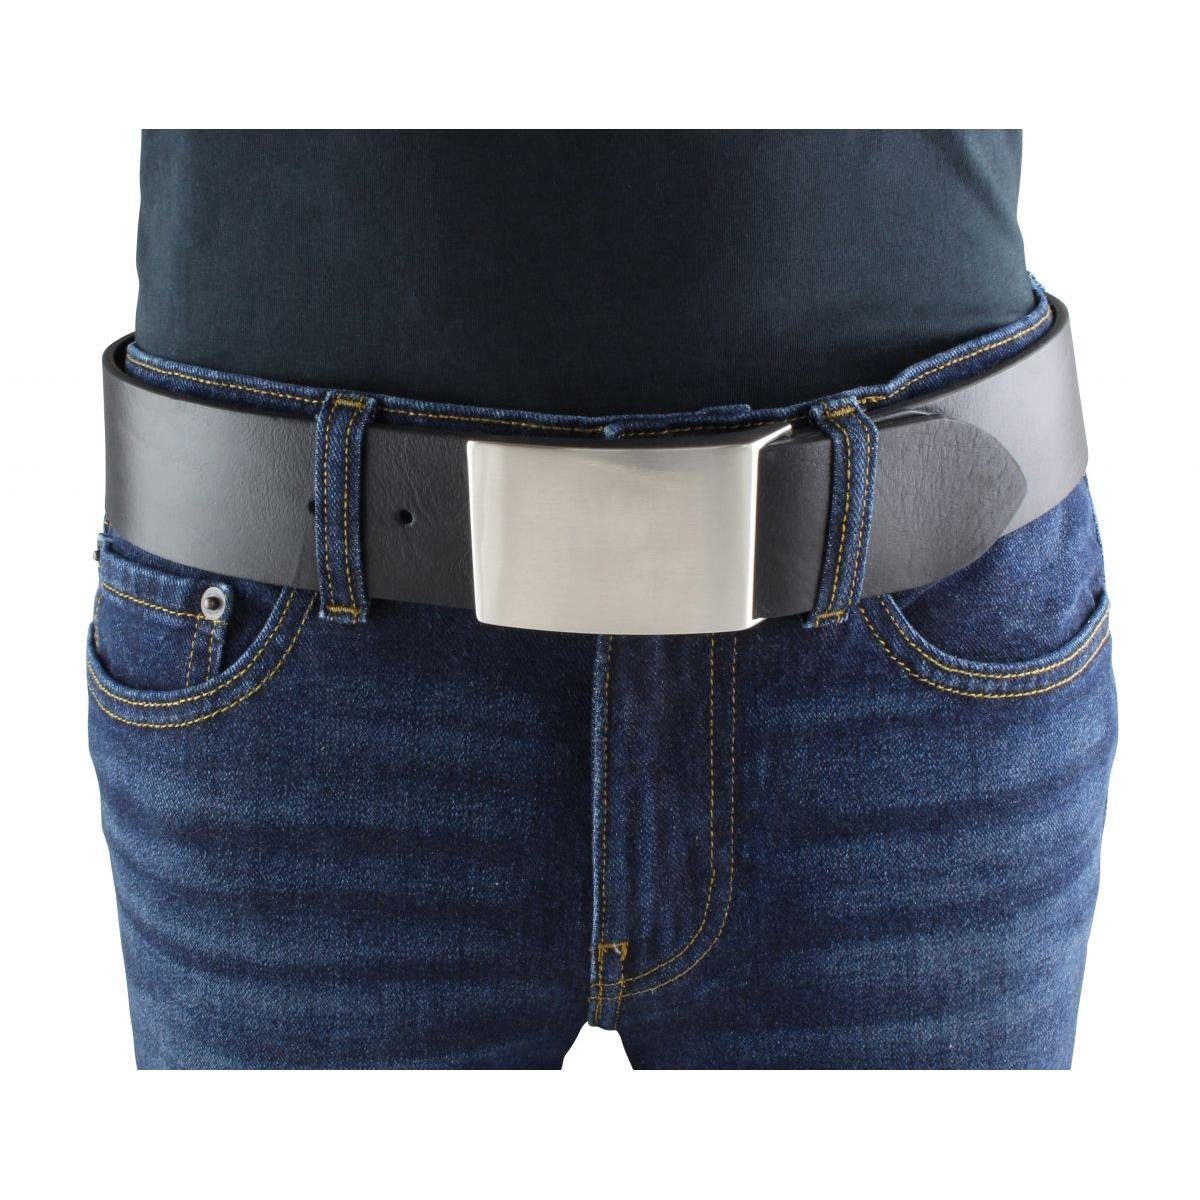 - Braun, Vollrindleder 50mm Silber 5,0 Herren Jeans BELTINGER für Ledergürtel aus cm Jeans-Gürtel Gürtel -